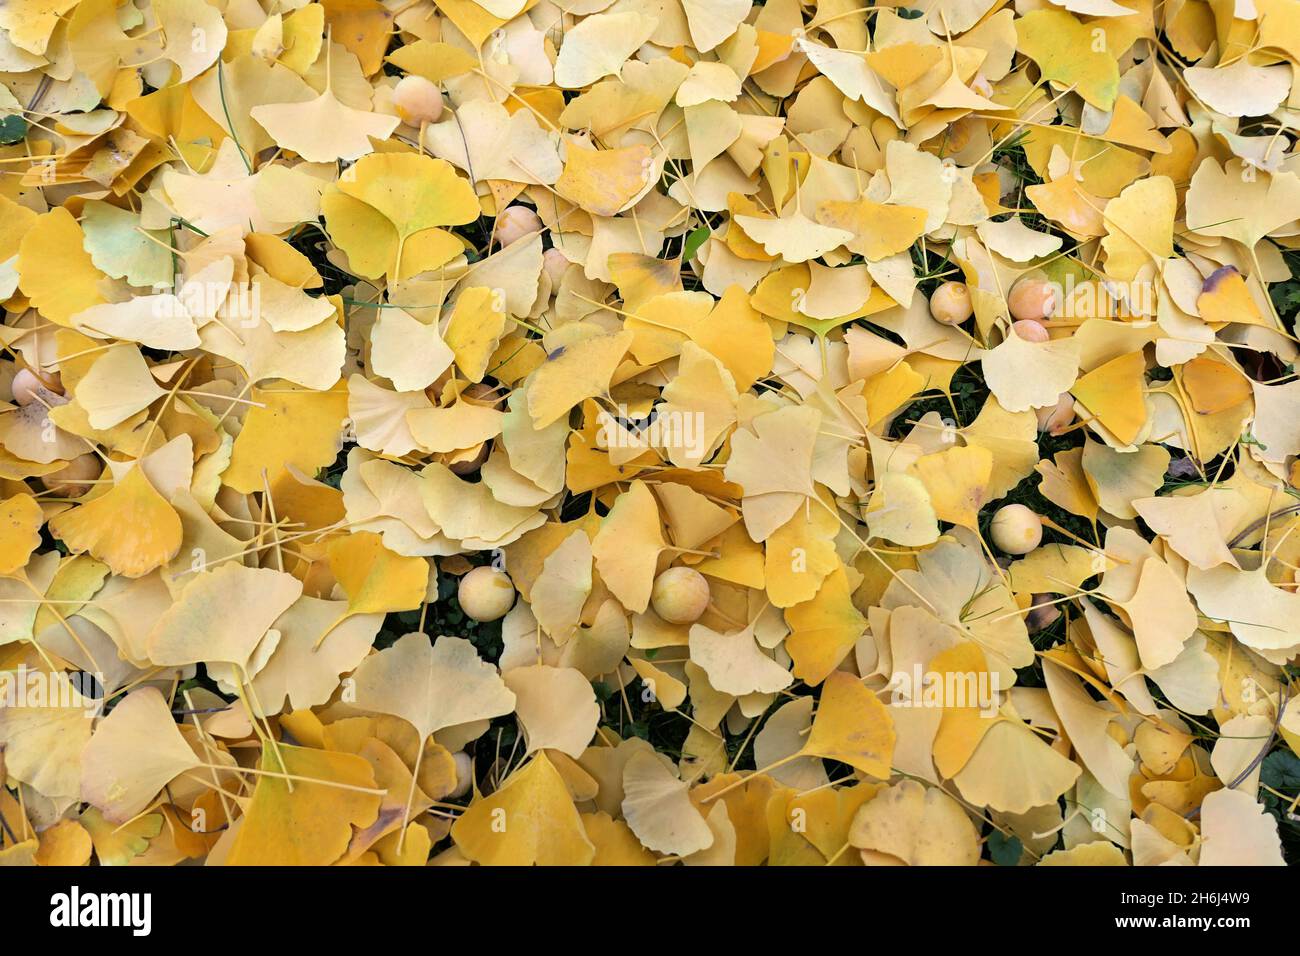 Ginkgo biloba yellow autumn leaves and fruits background. Stock Photo